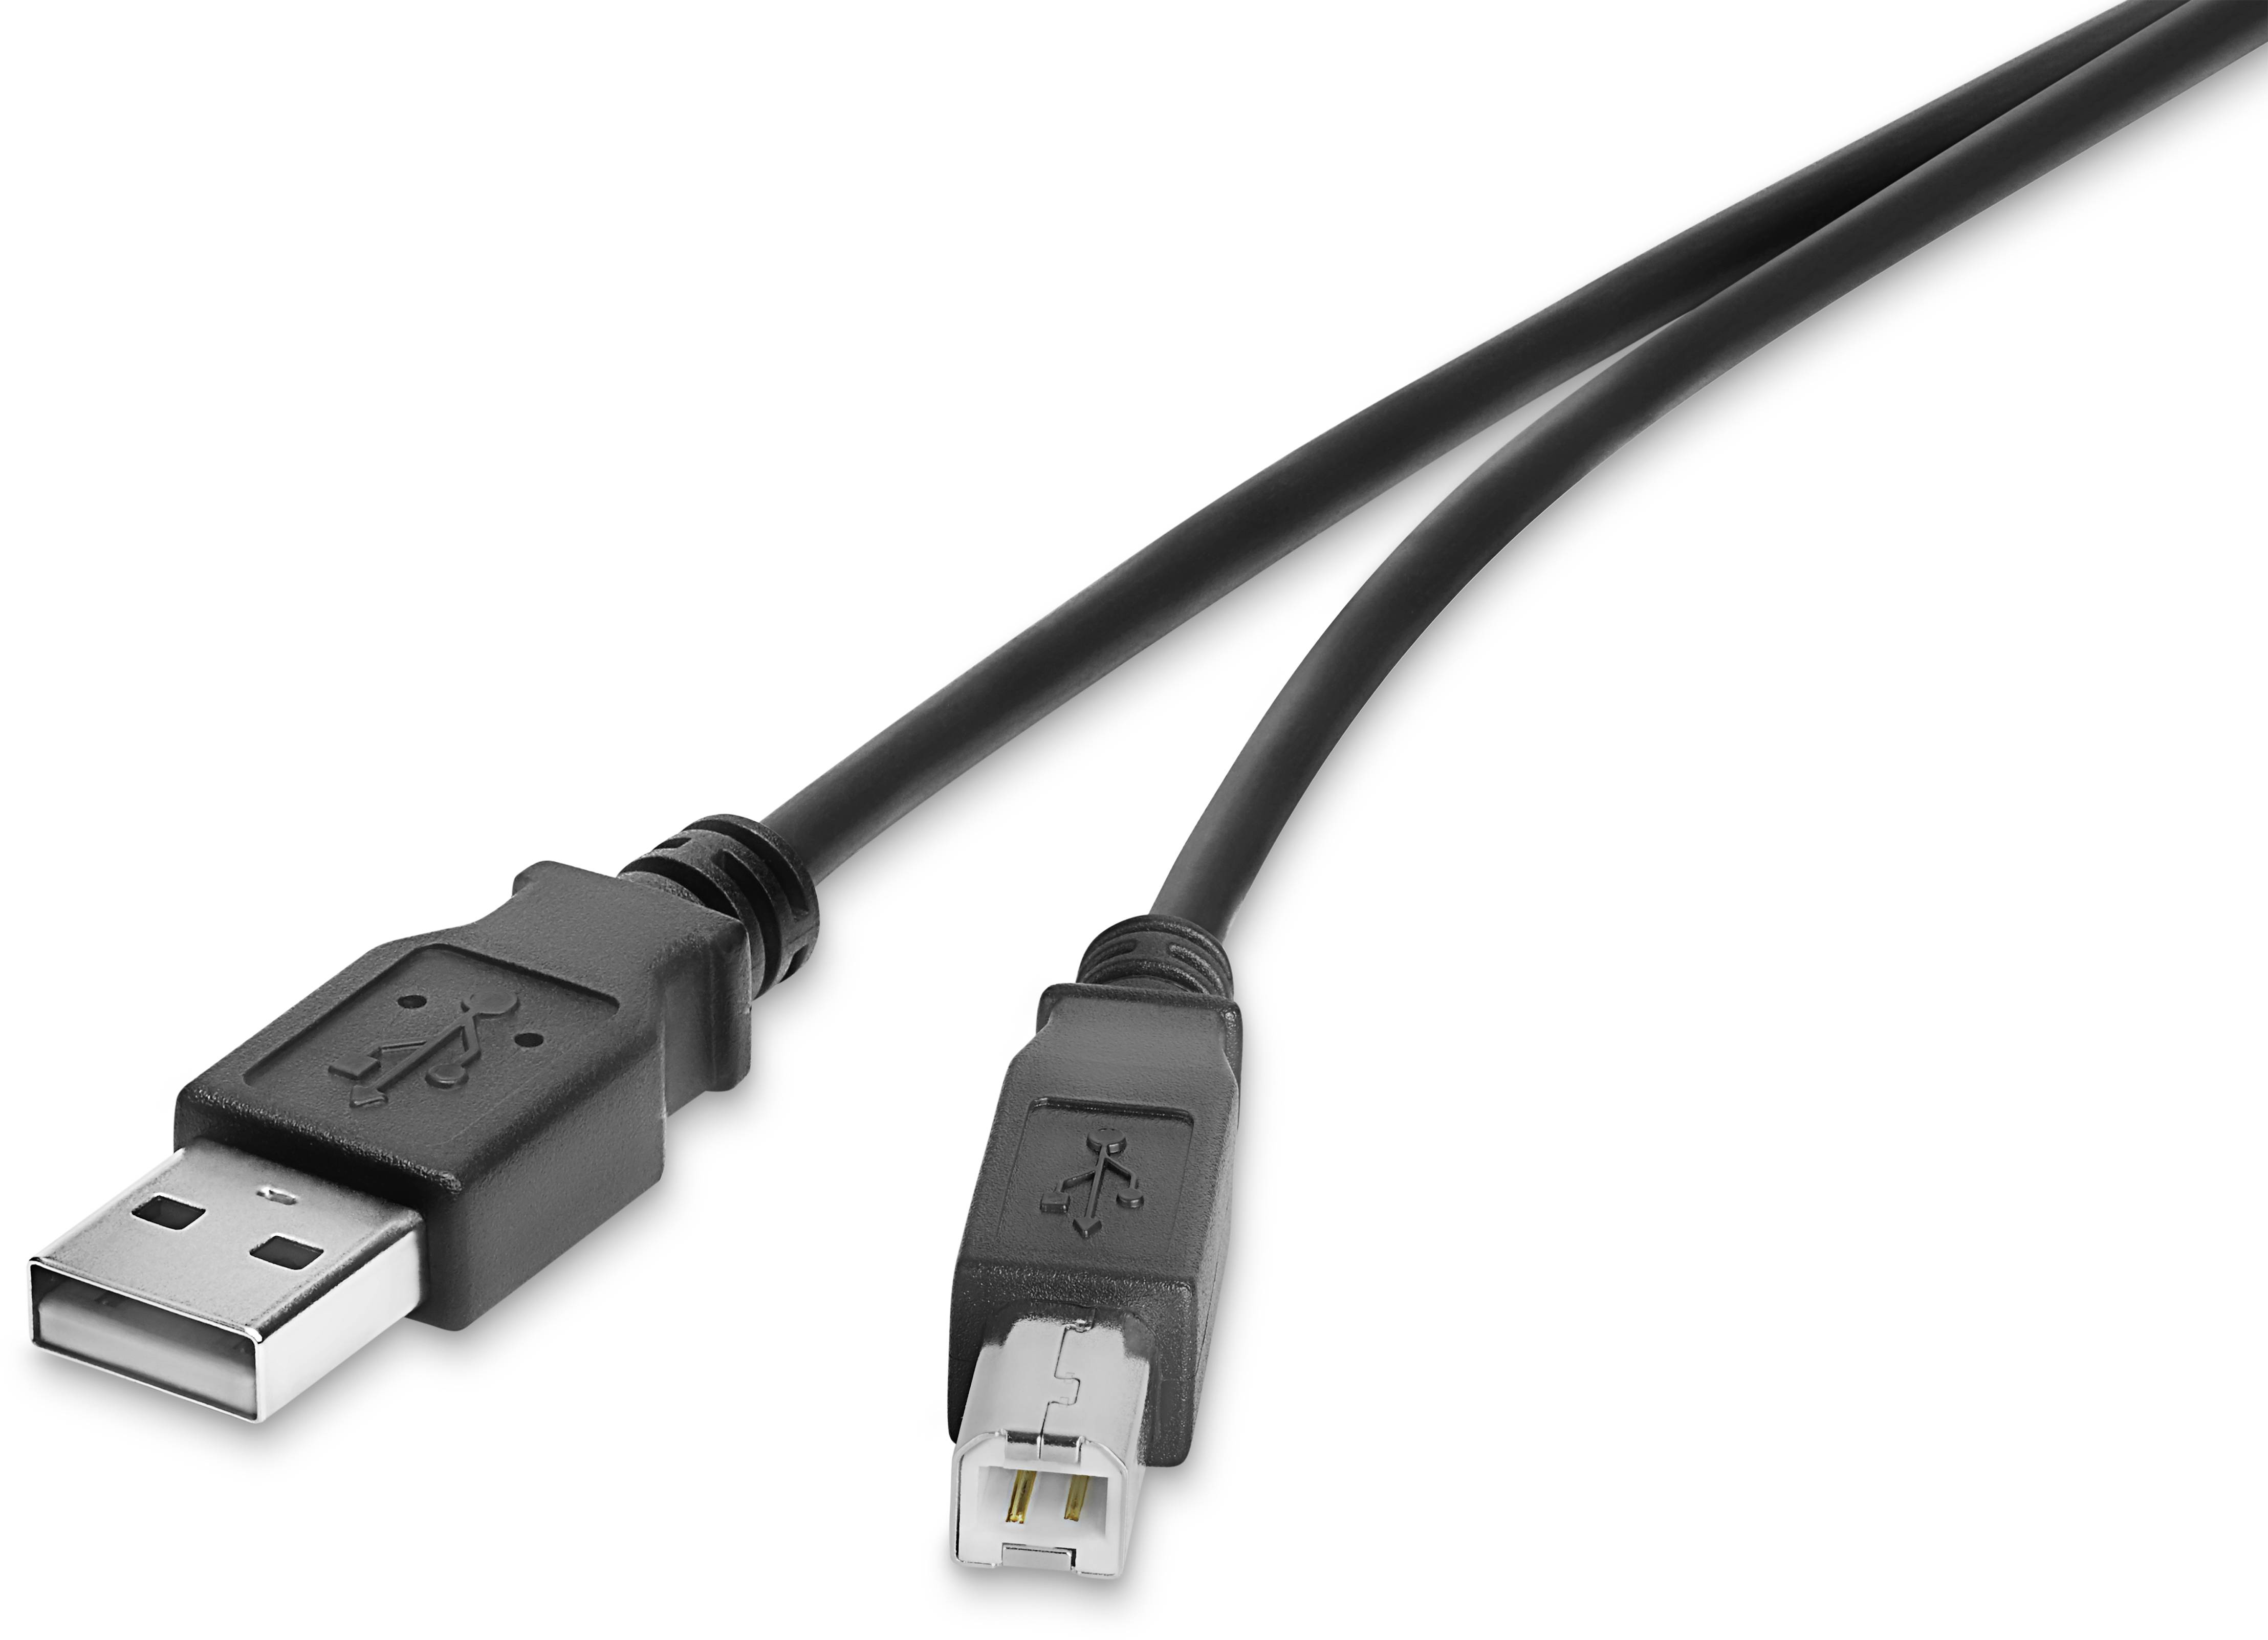 CONRAD Renkforce USB 2.0 Anschlusskabel [1x USB 2.0 Stecker A - 1x USB 2.0 Stecker B] 0.5 m Schwarz